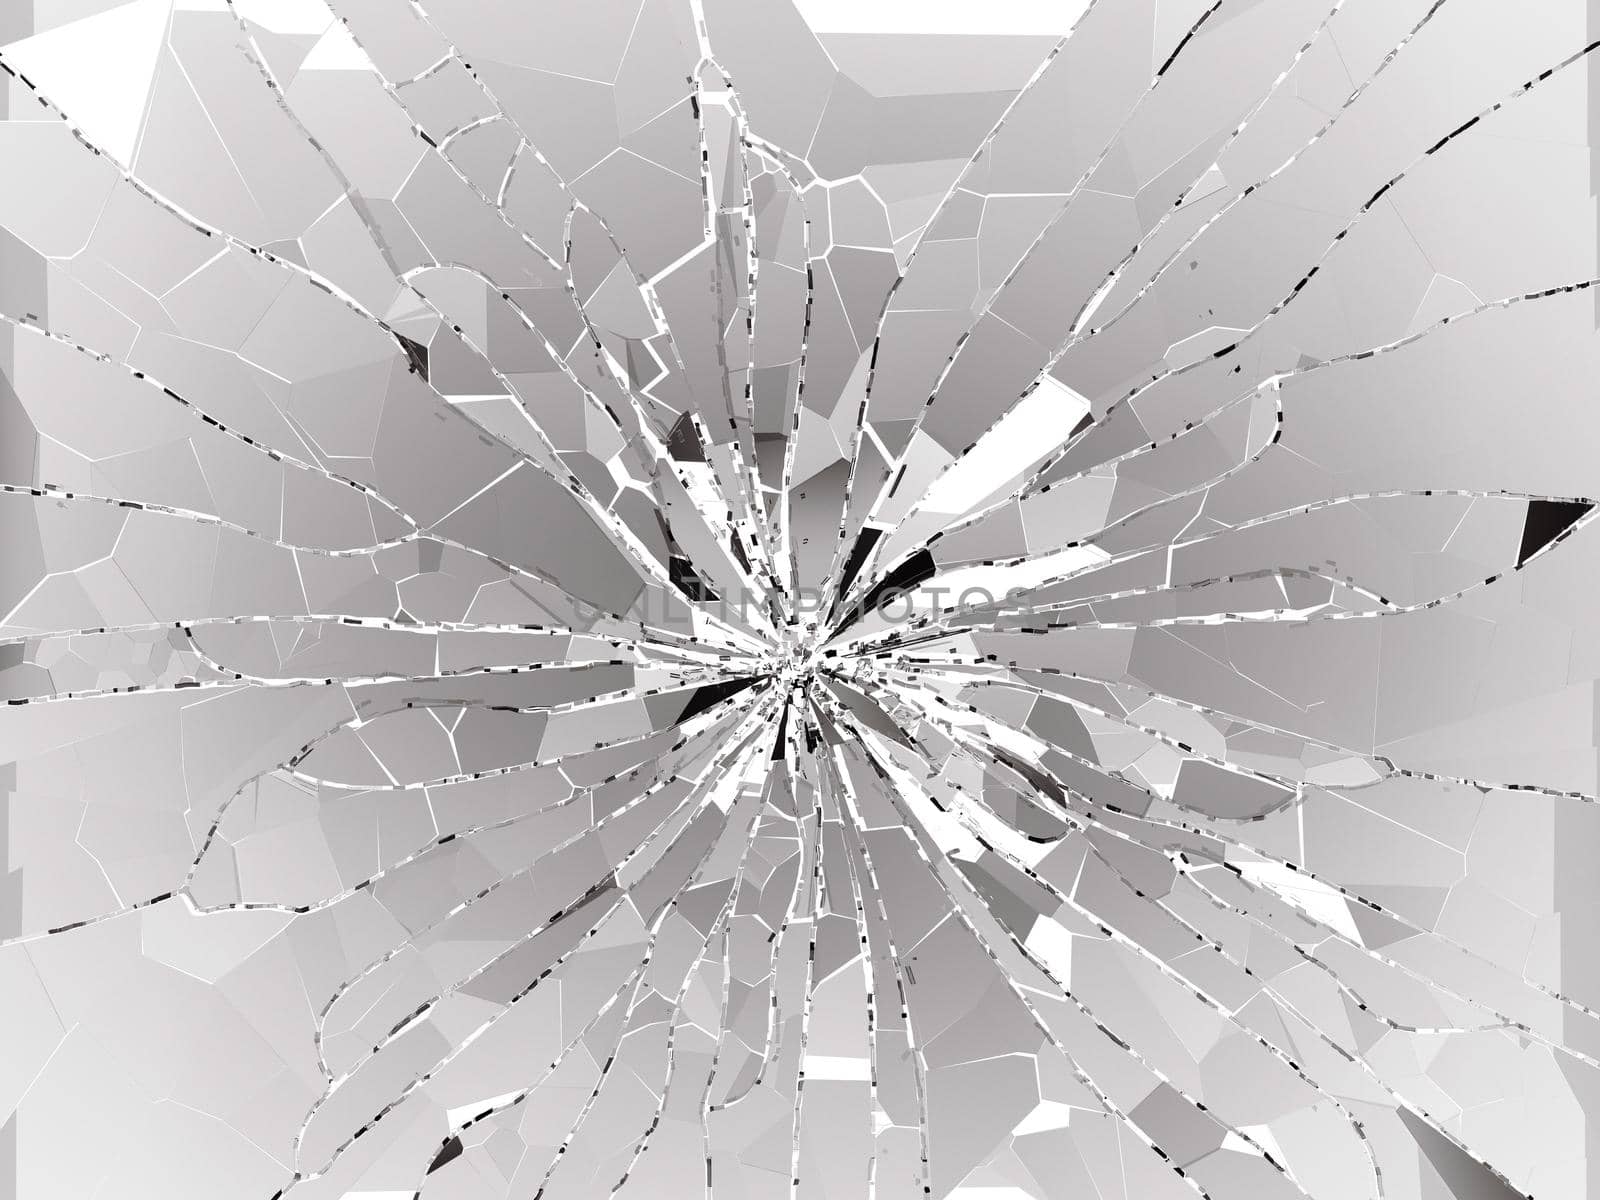 Damaged or broken glass on white by Arsgera